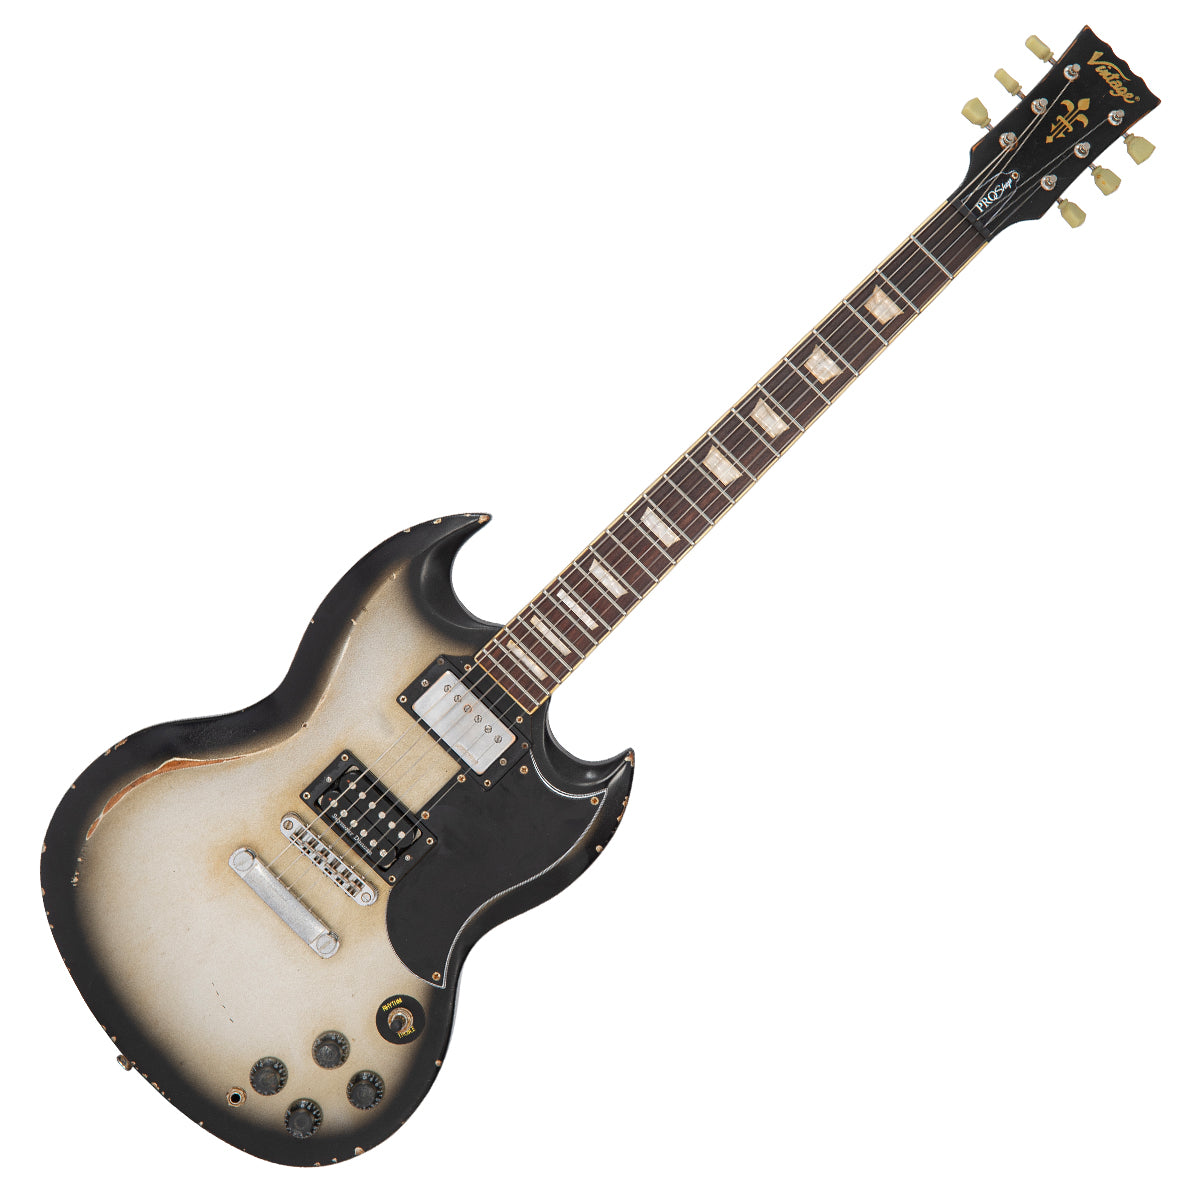 SOLD - Vintage VS6 ProShop Custom-Build ~ Heavy Relic Silver Burst, Electric Guitars for sale at Richards Guitars.